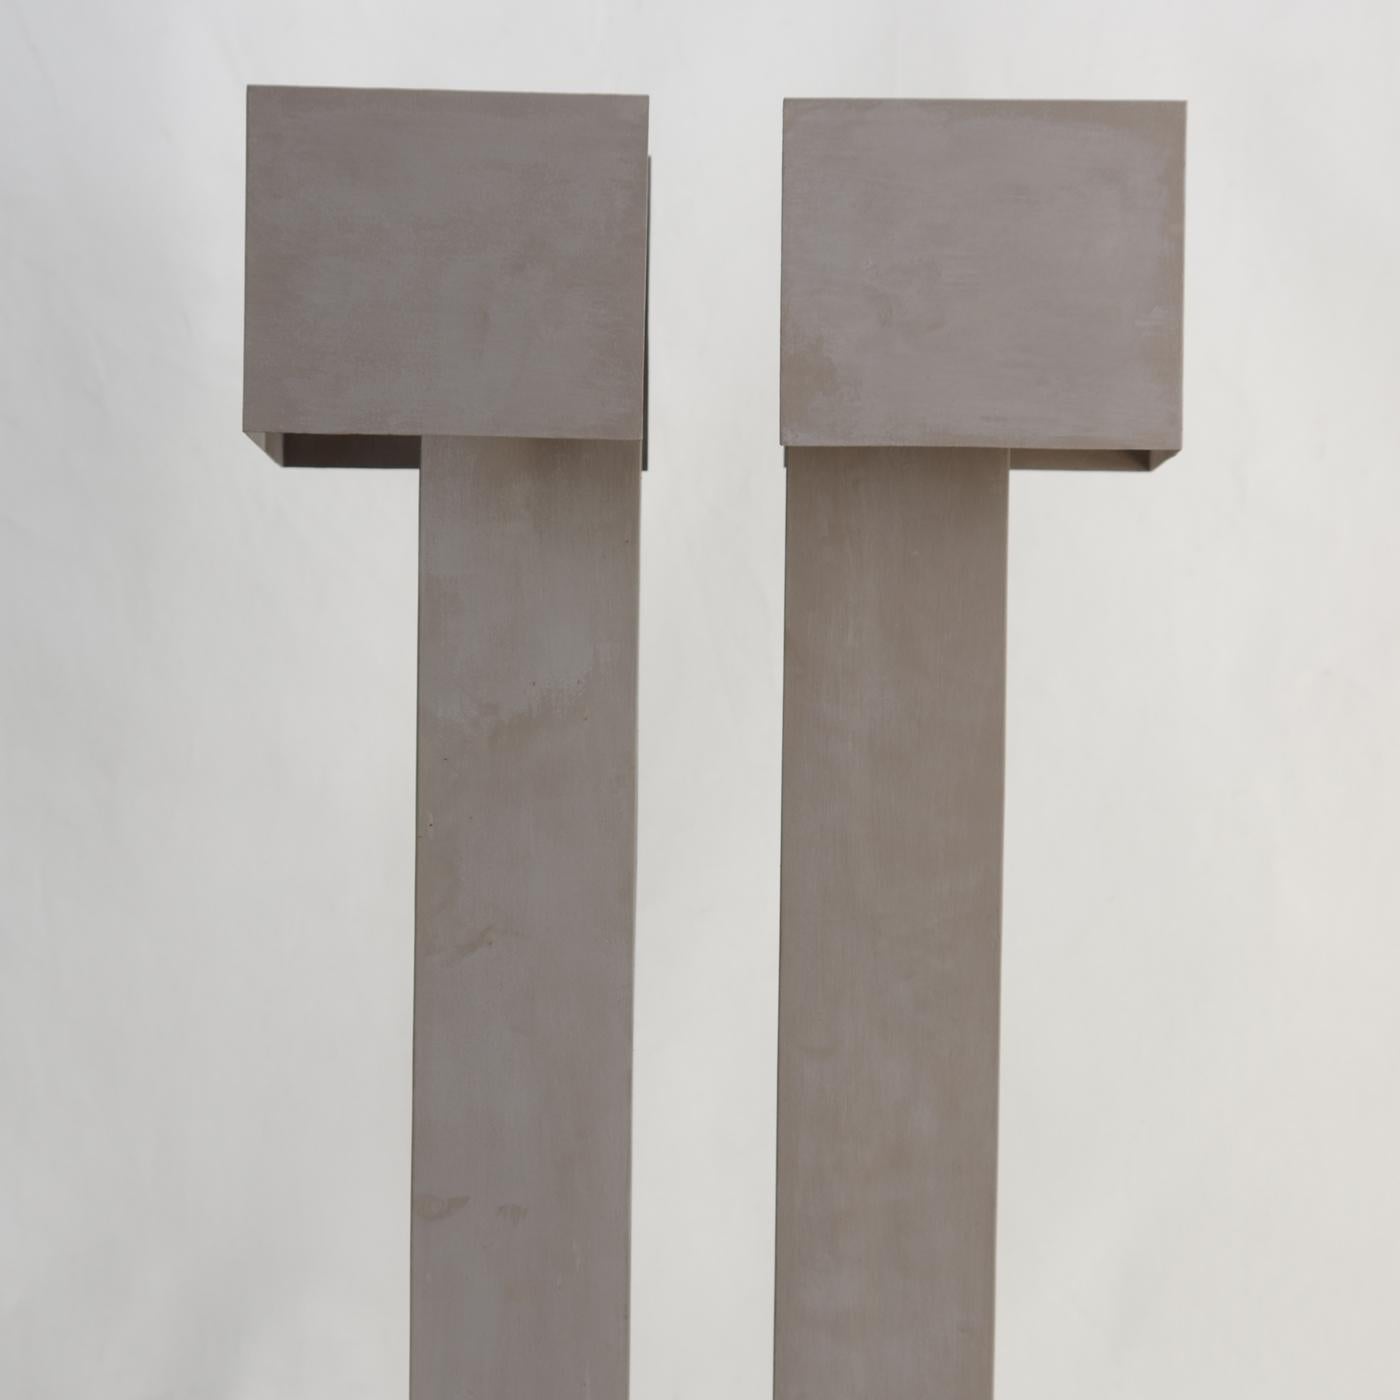 Italian Twin Towers Light-Sculpture by Giorgio Cubeddu